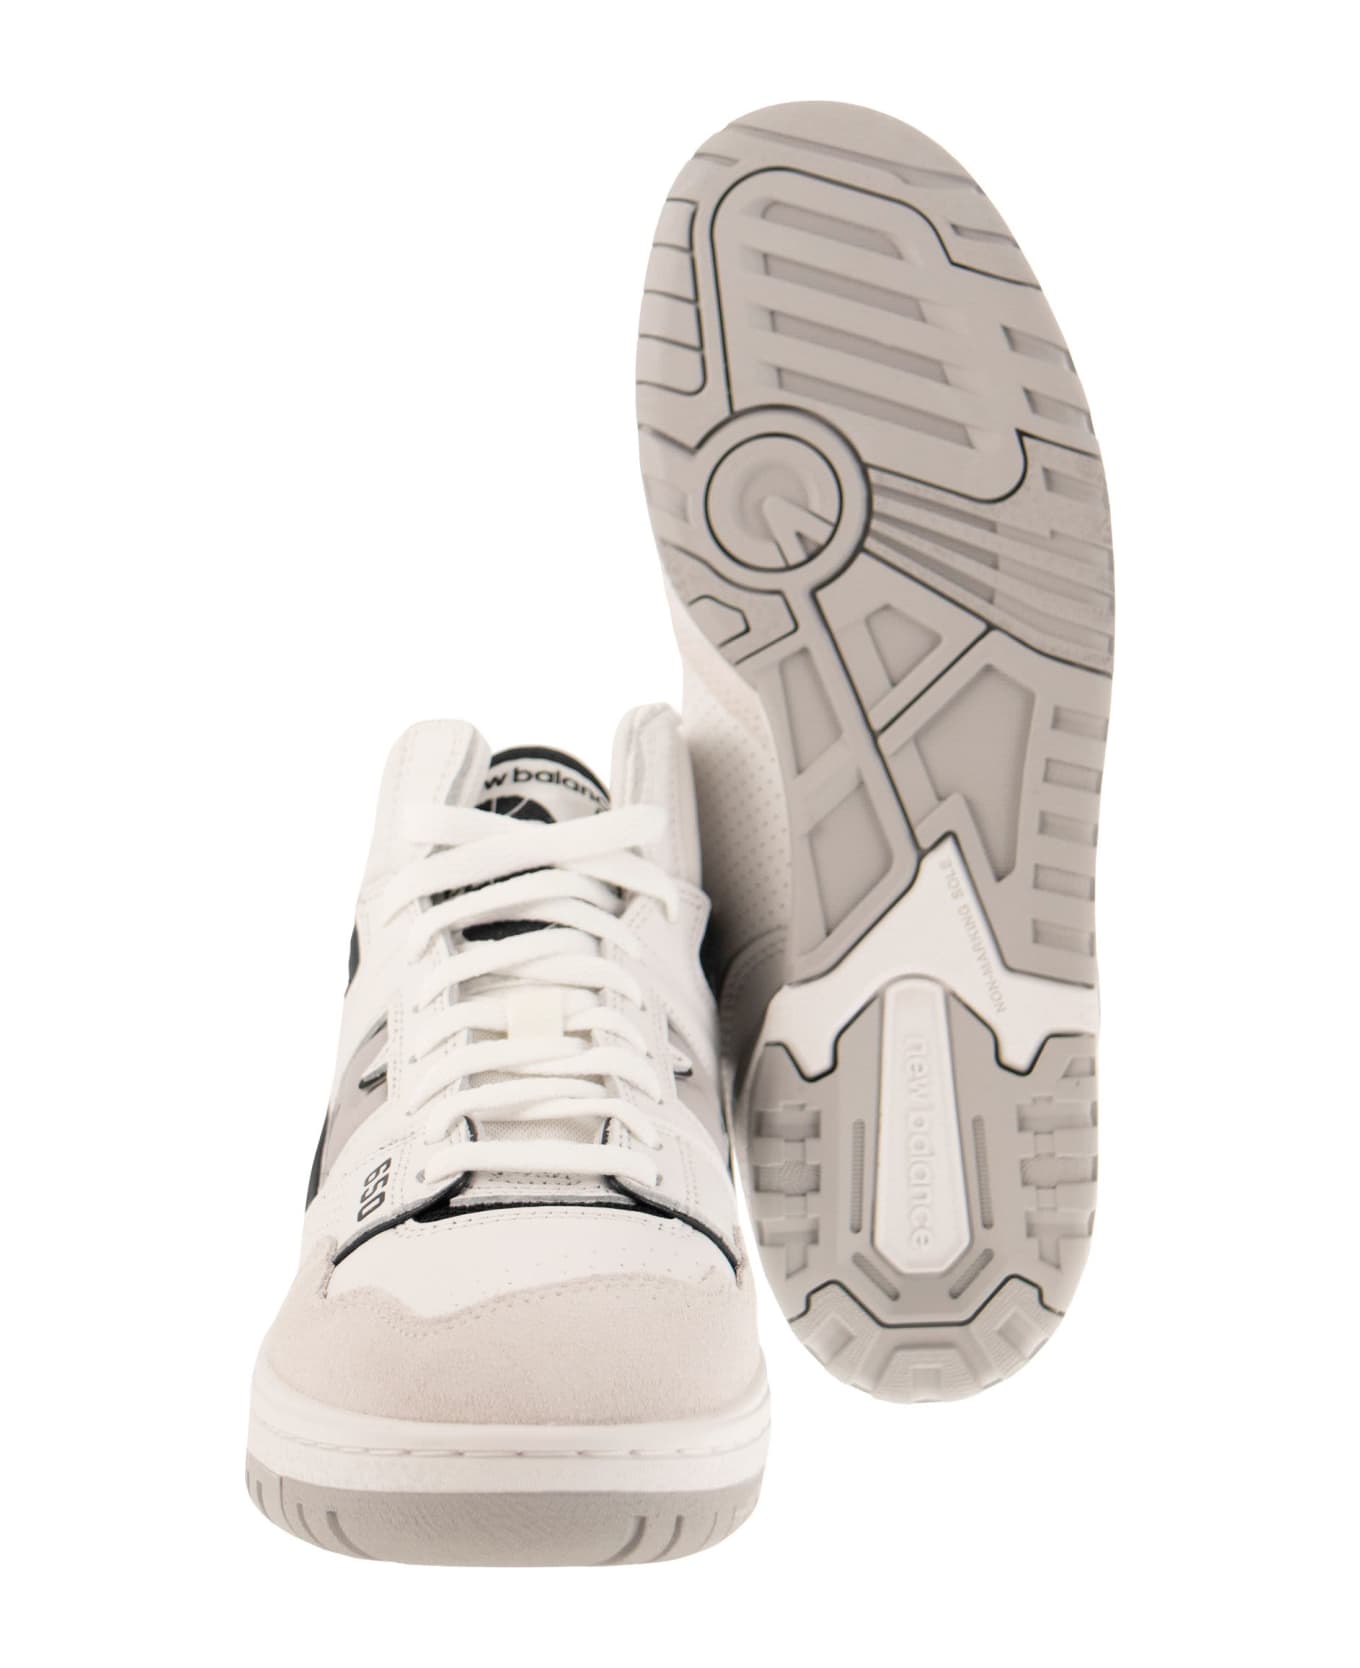 New Balance Bb650 - Sneakers - White